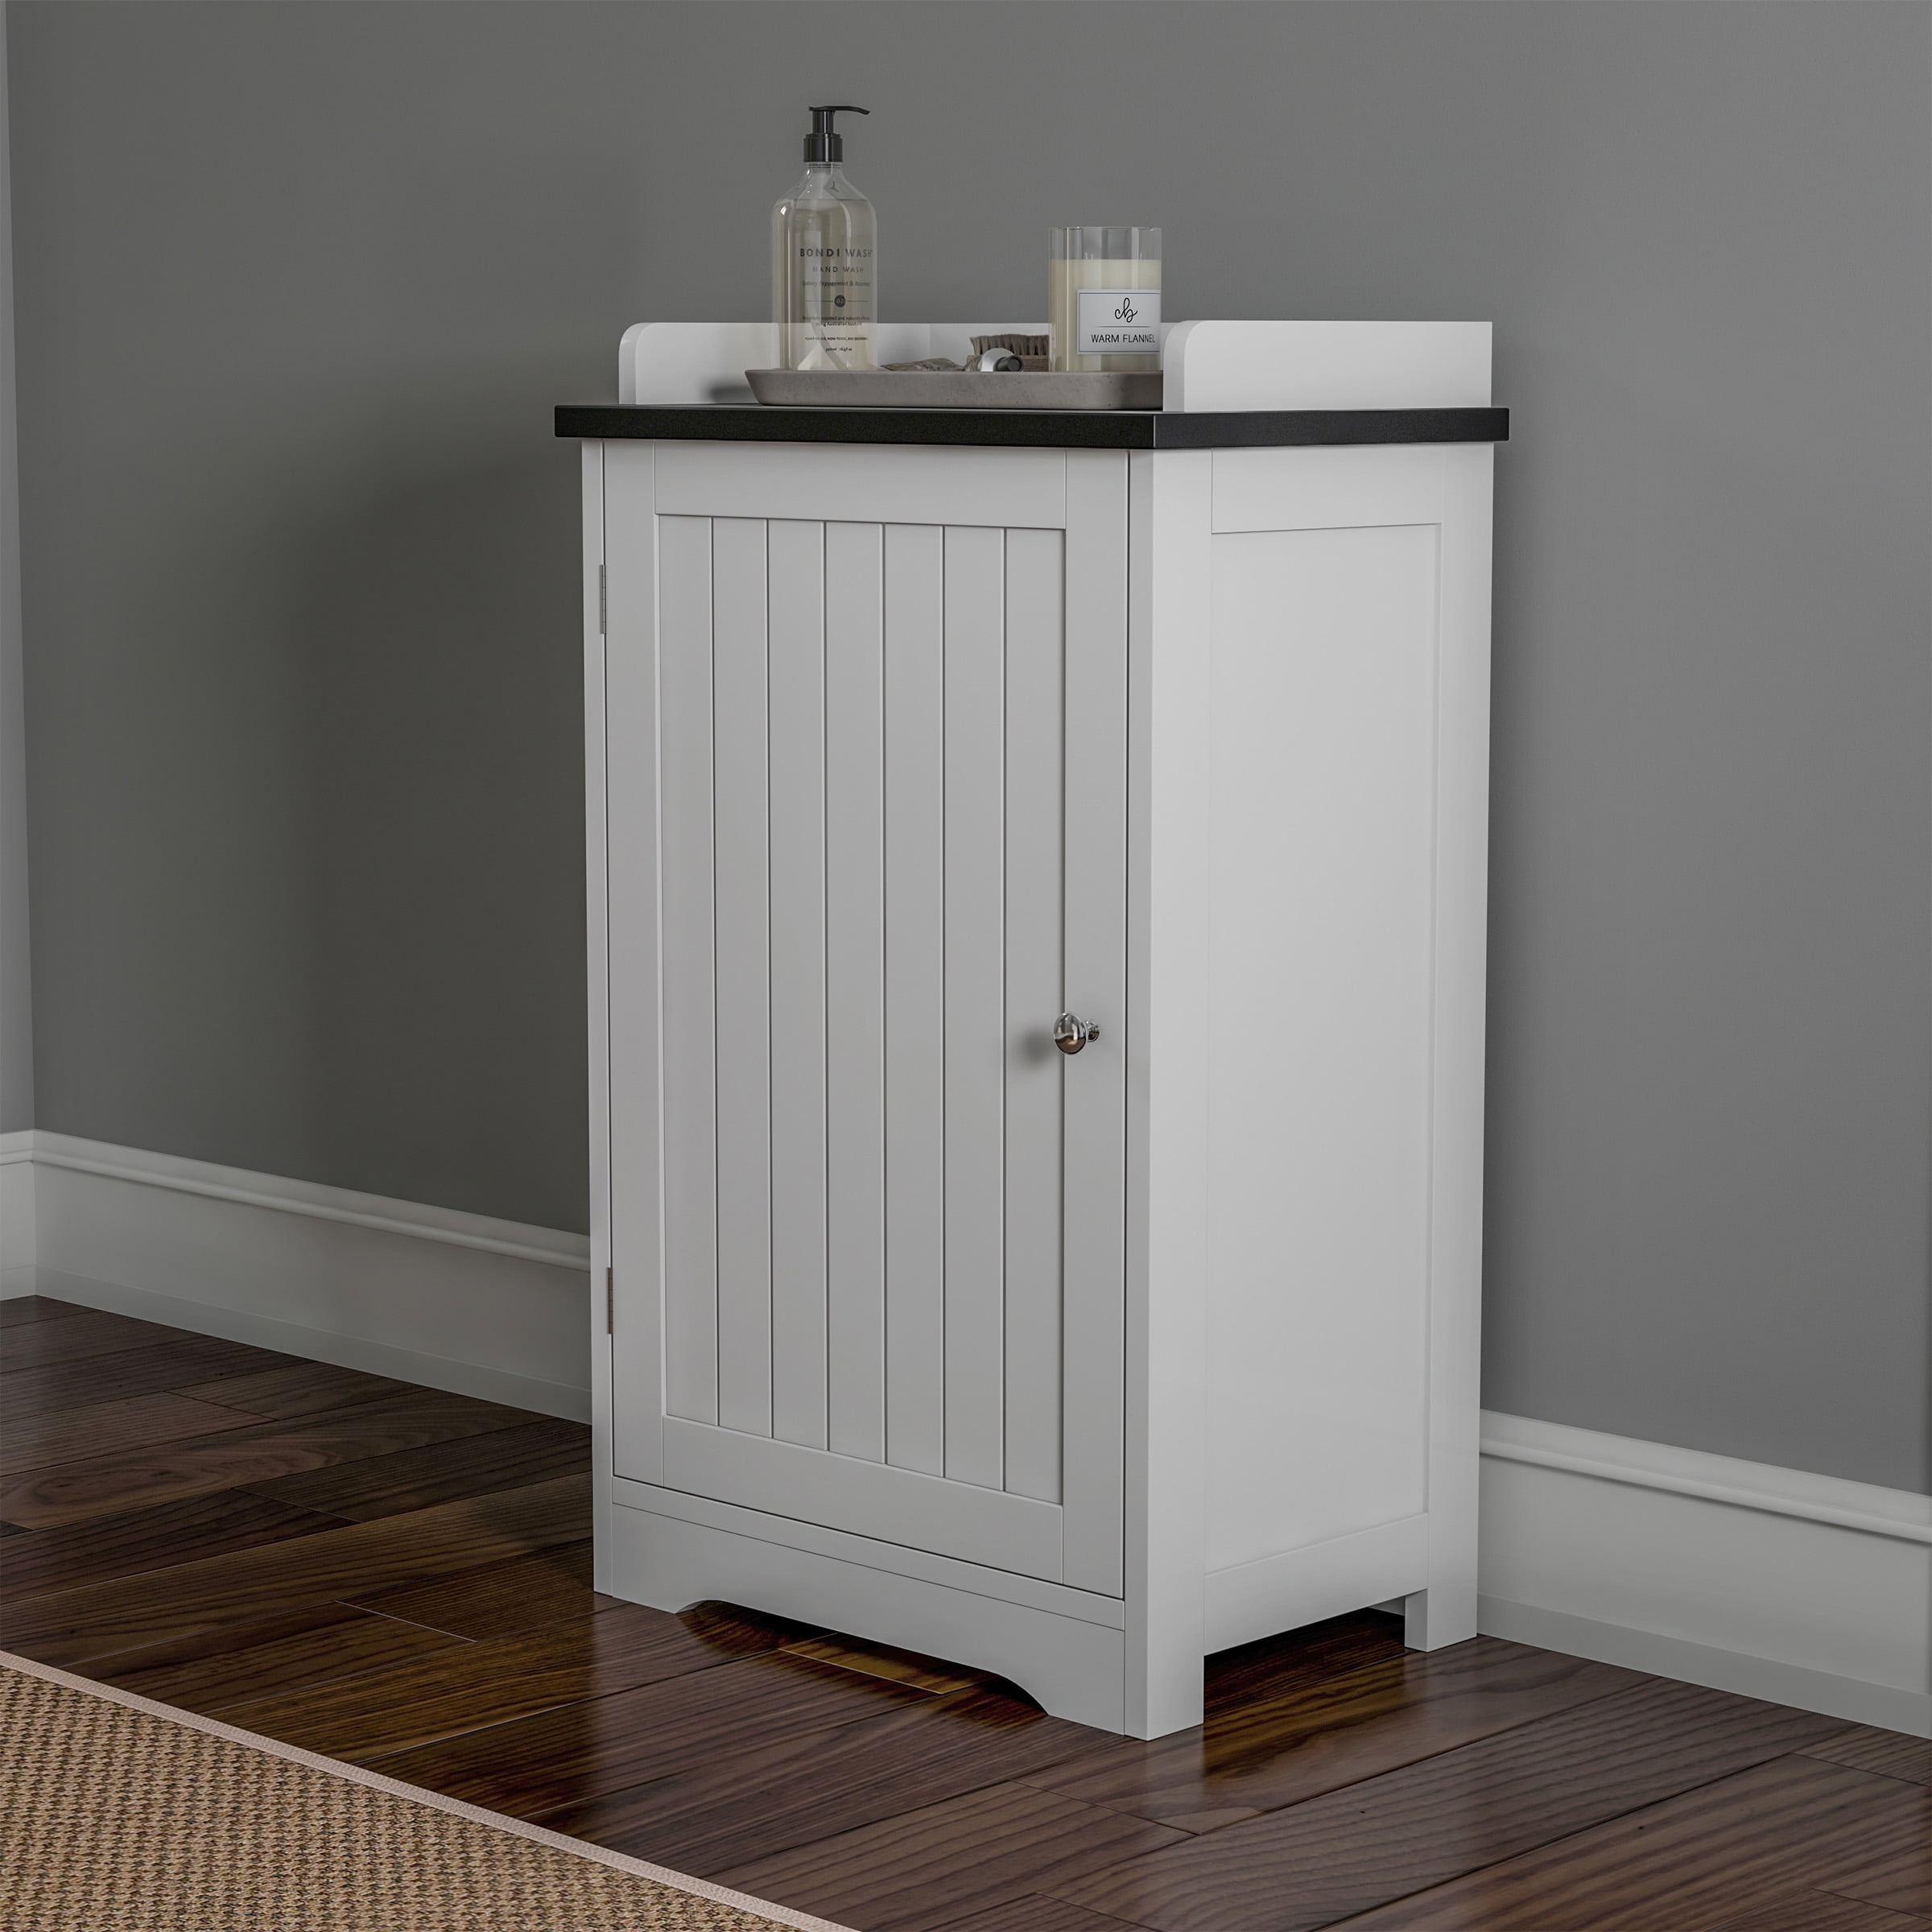 Somerset Home Bathroom Cabinet – Floor Cupboard for Storage (White ...